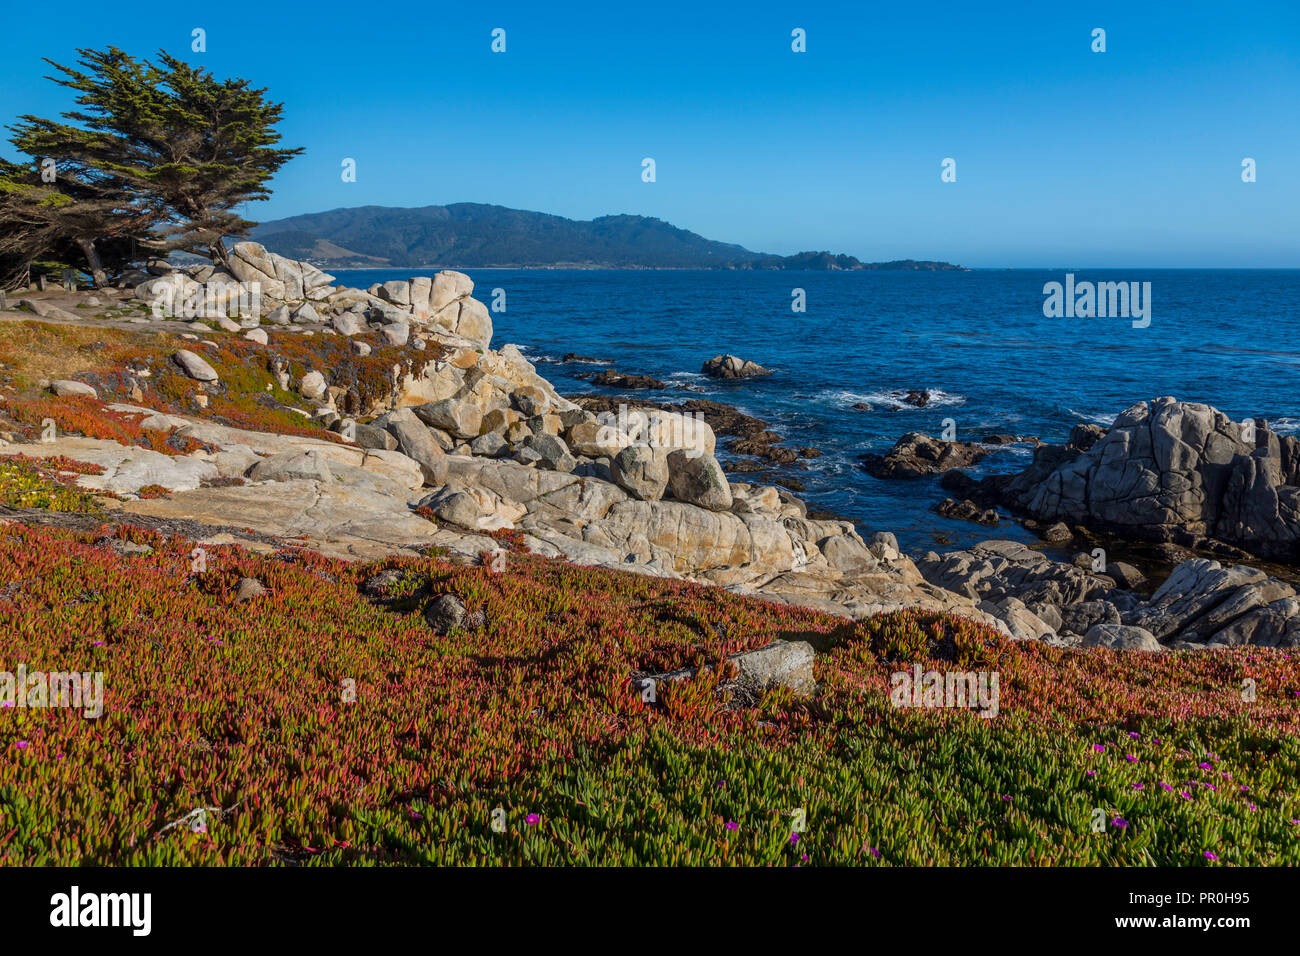 View of Carmel Bay and rocky shoreline at Pebble Beach, 17 Mile Drive, Peninsula, Monterey, California, United States of America, North America Stock Photo